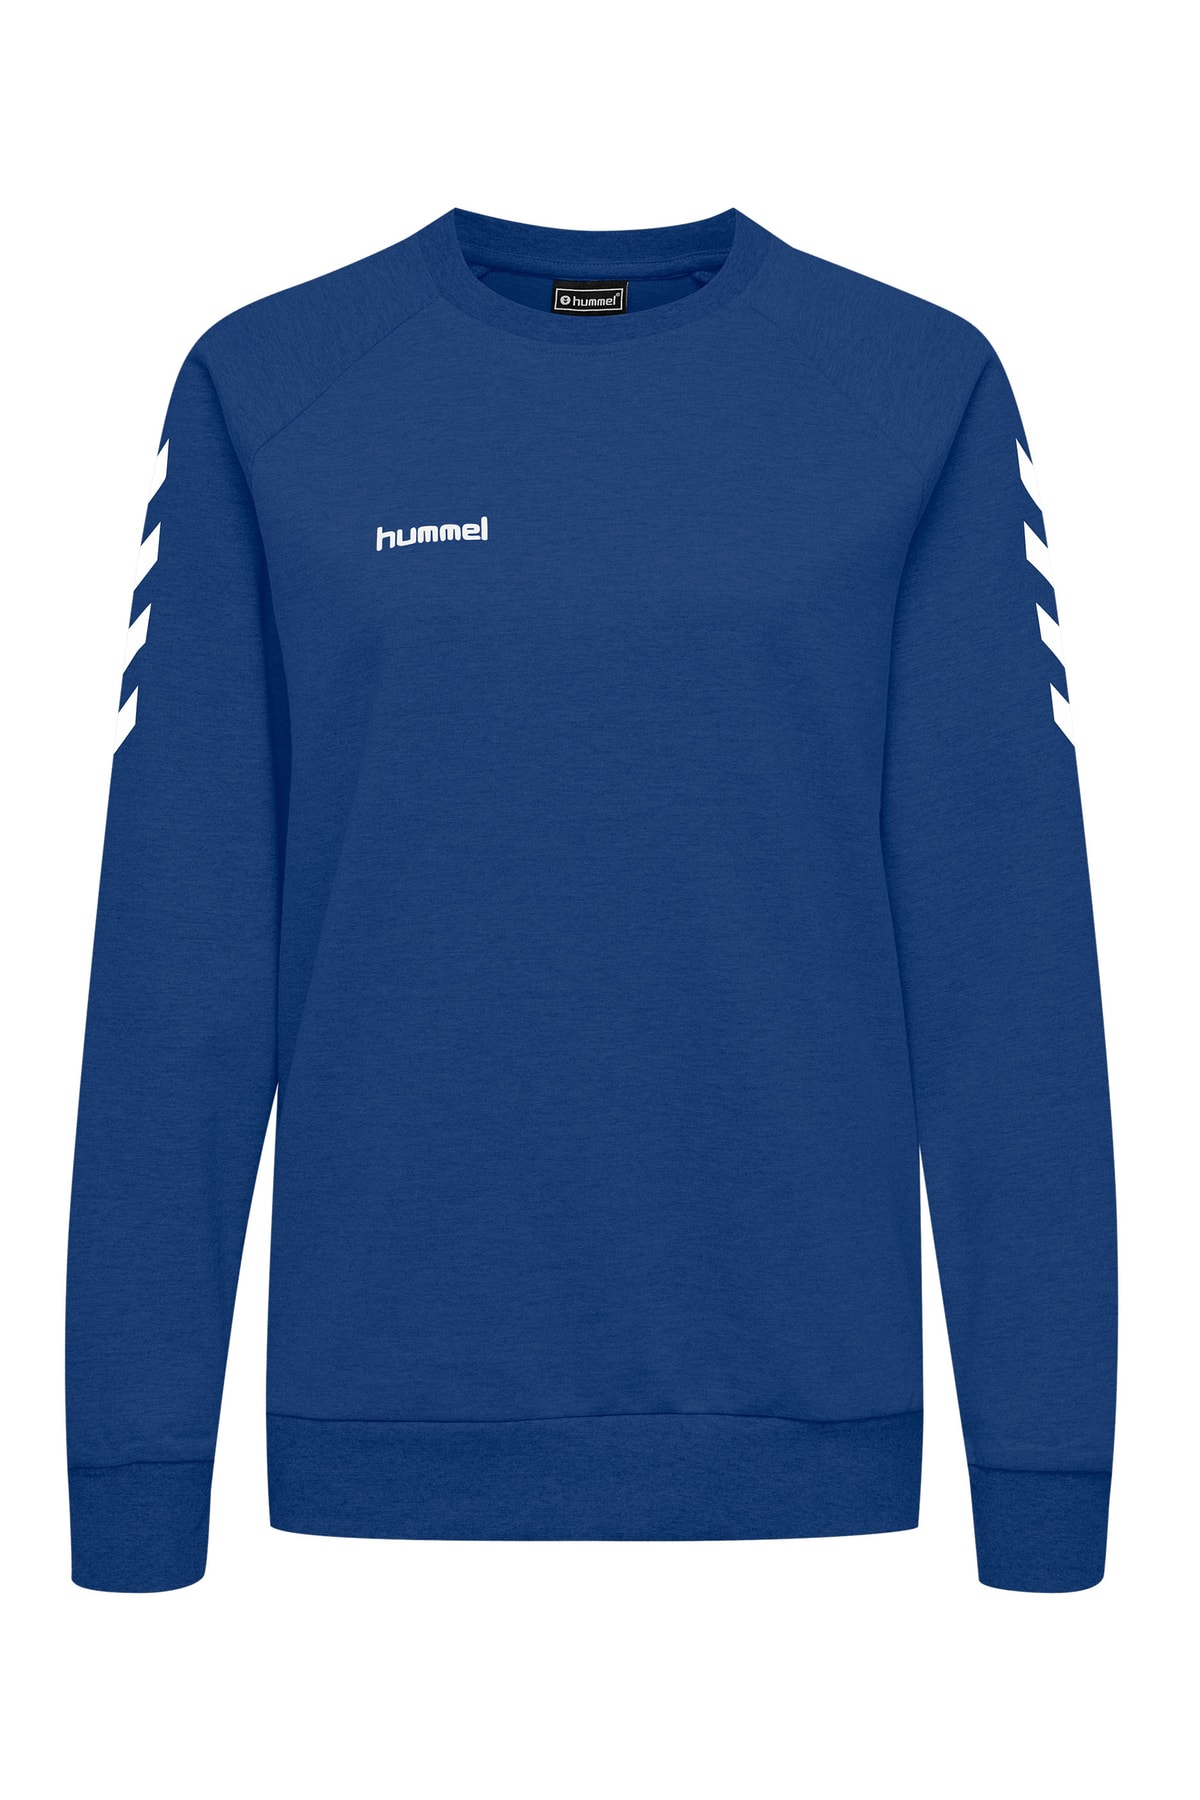 HUMMEL Sweatshirt Blau Regular Fit